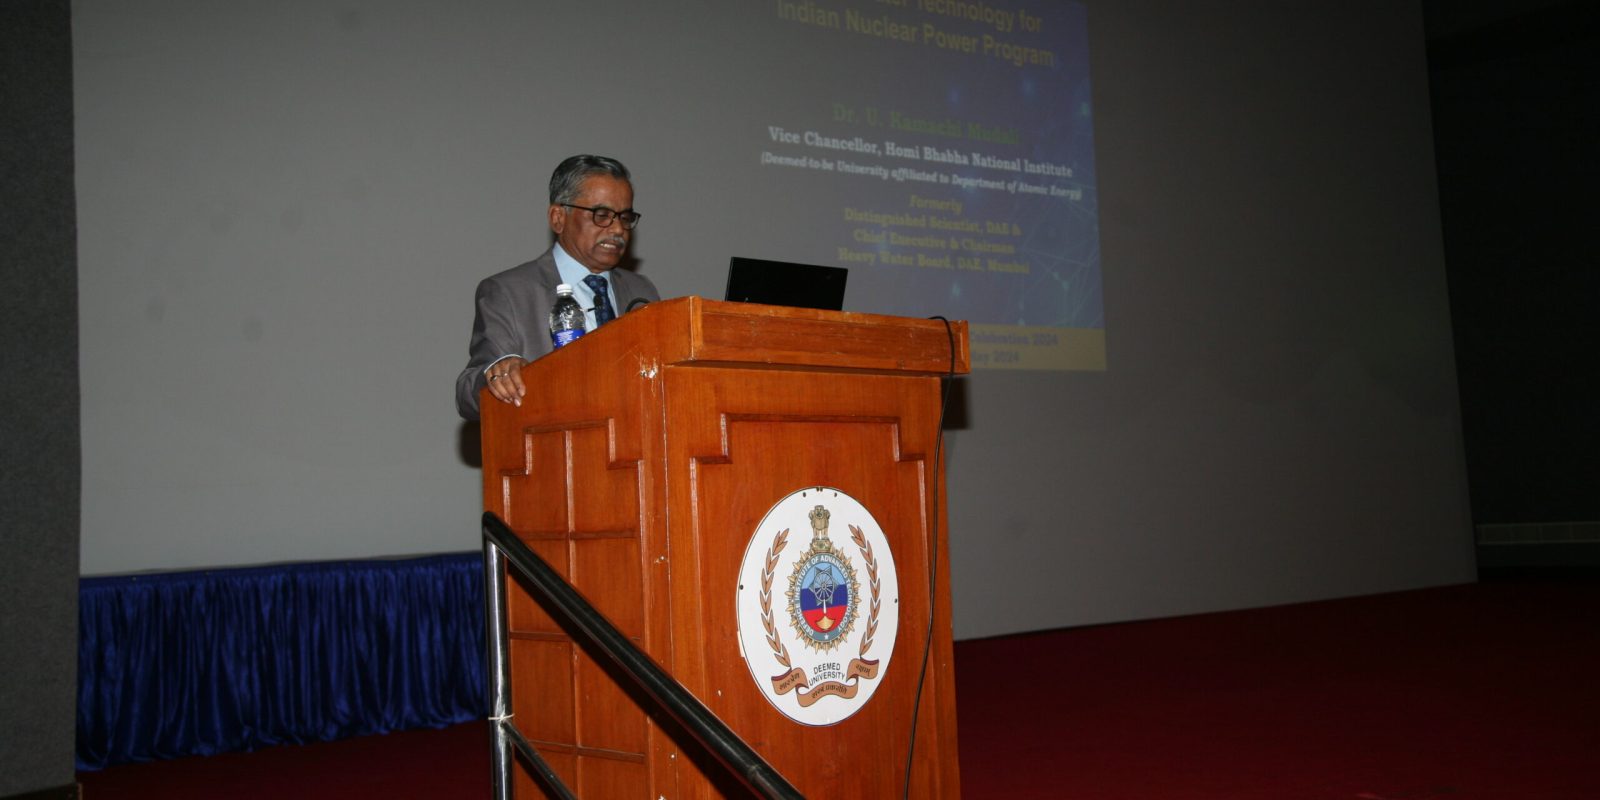 "Technology Day”, Prof. U. Kamachi Mudali, Vice Chancellor of the Homi Bhabha National Institute (DU) Mumbai